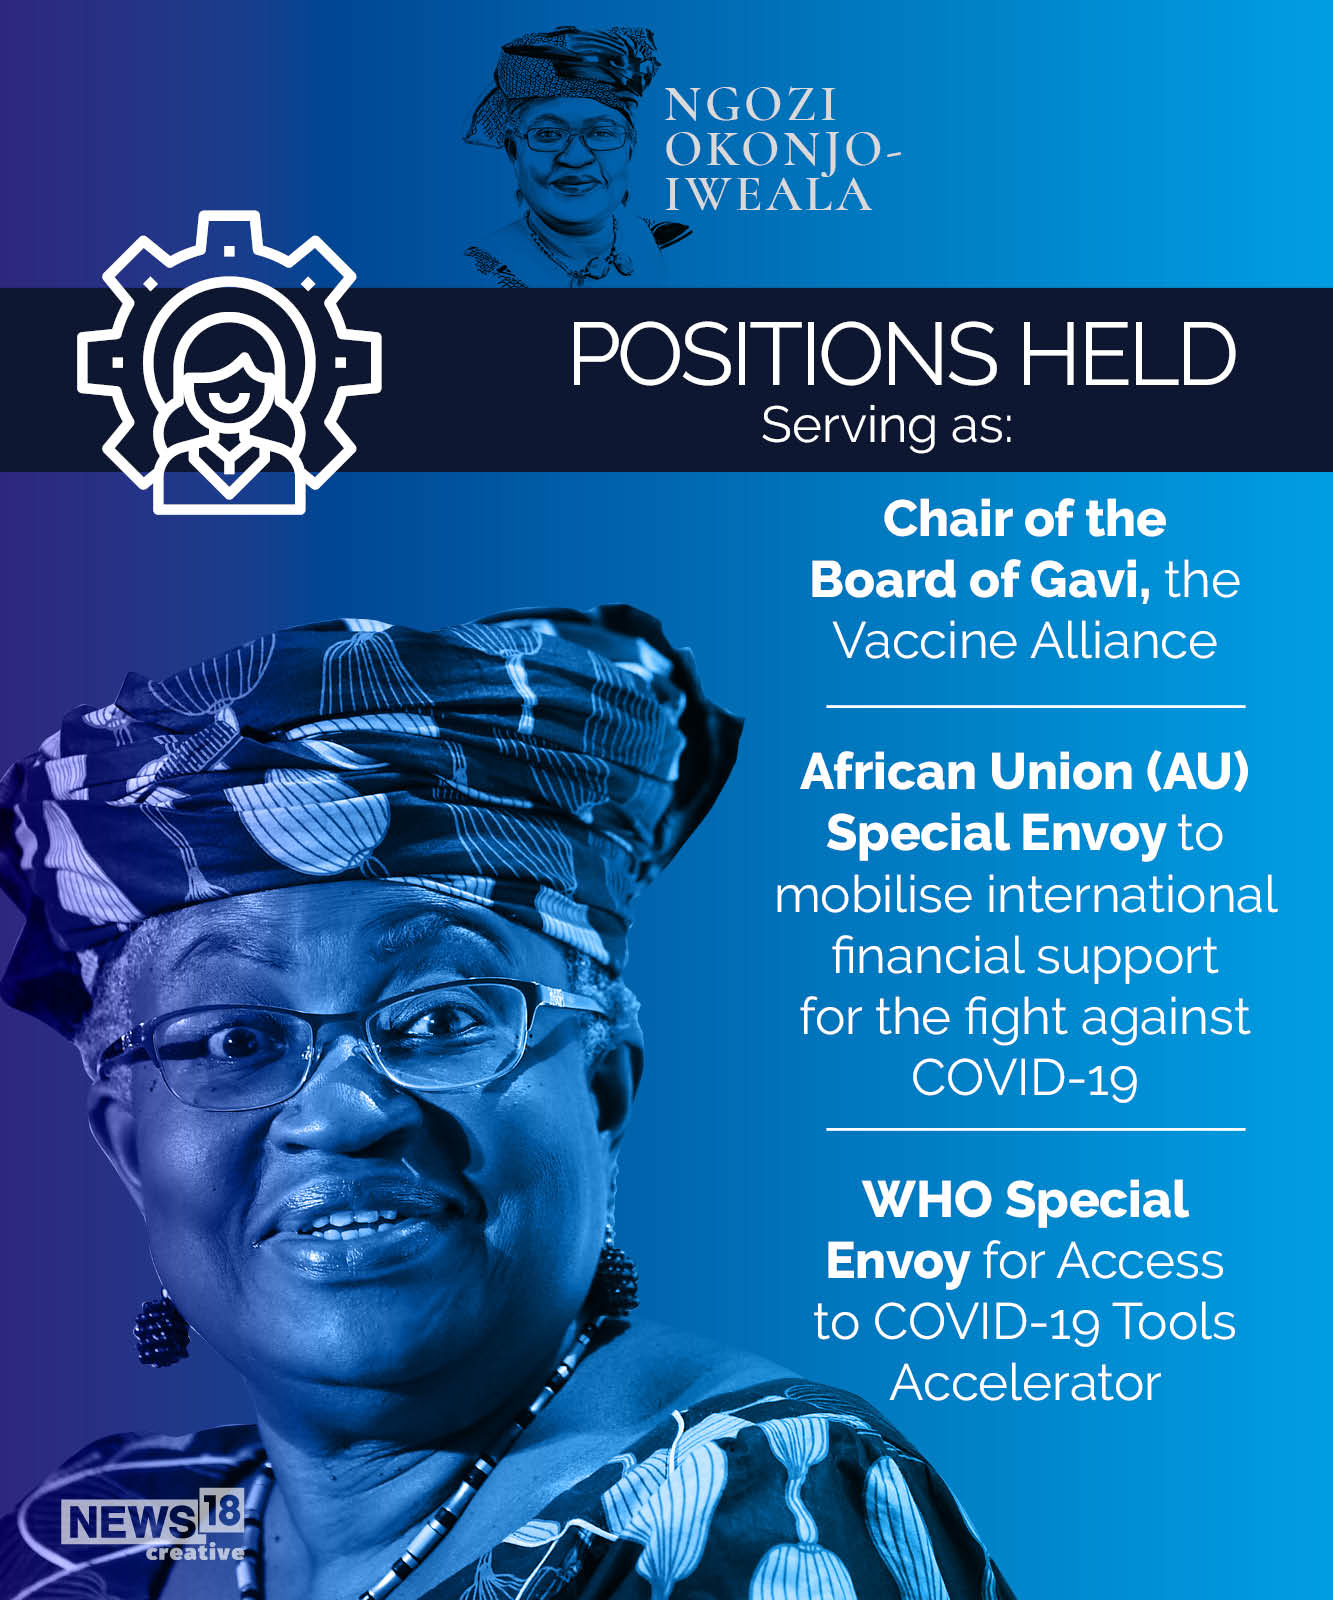 Meet Ngozi Okonjo-Iweala, the new WTO chief